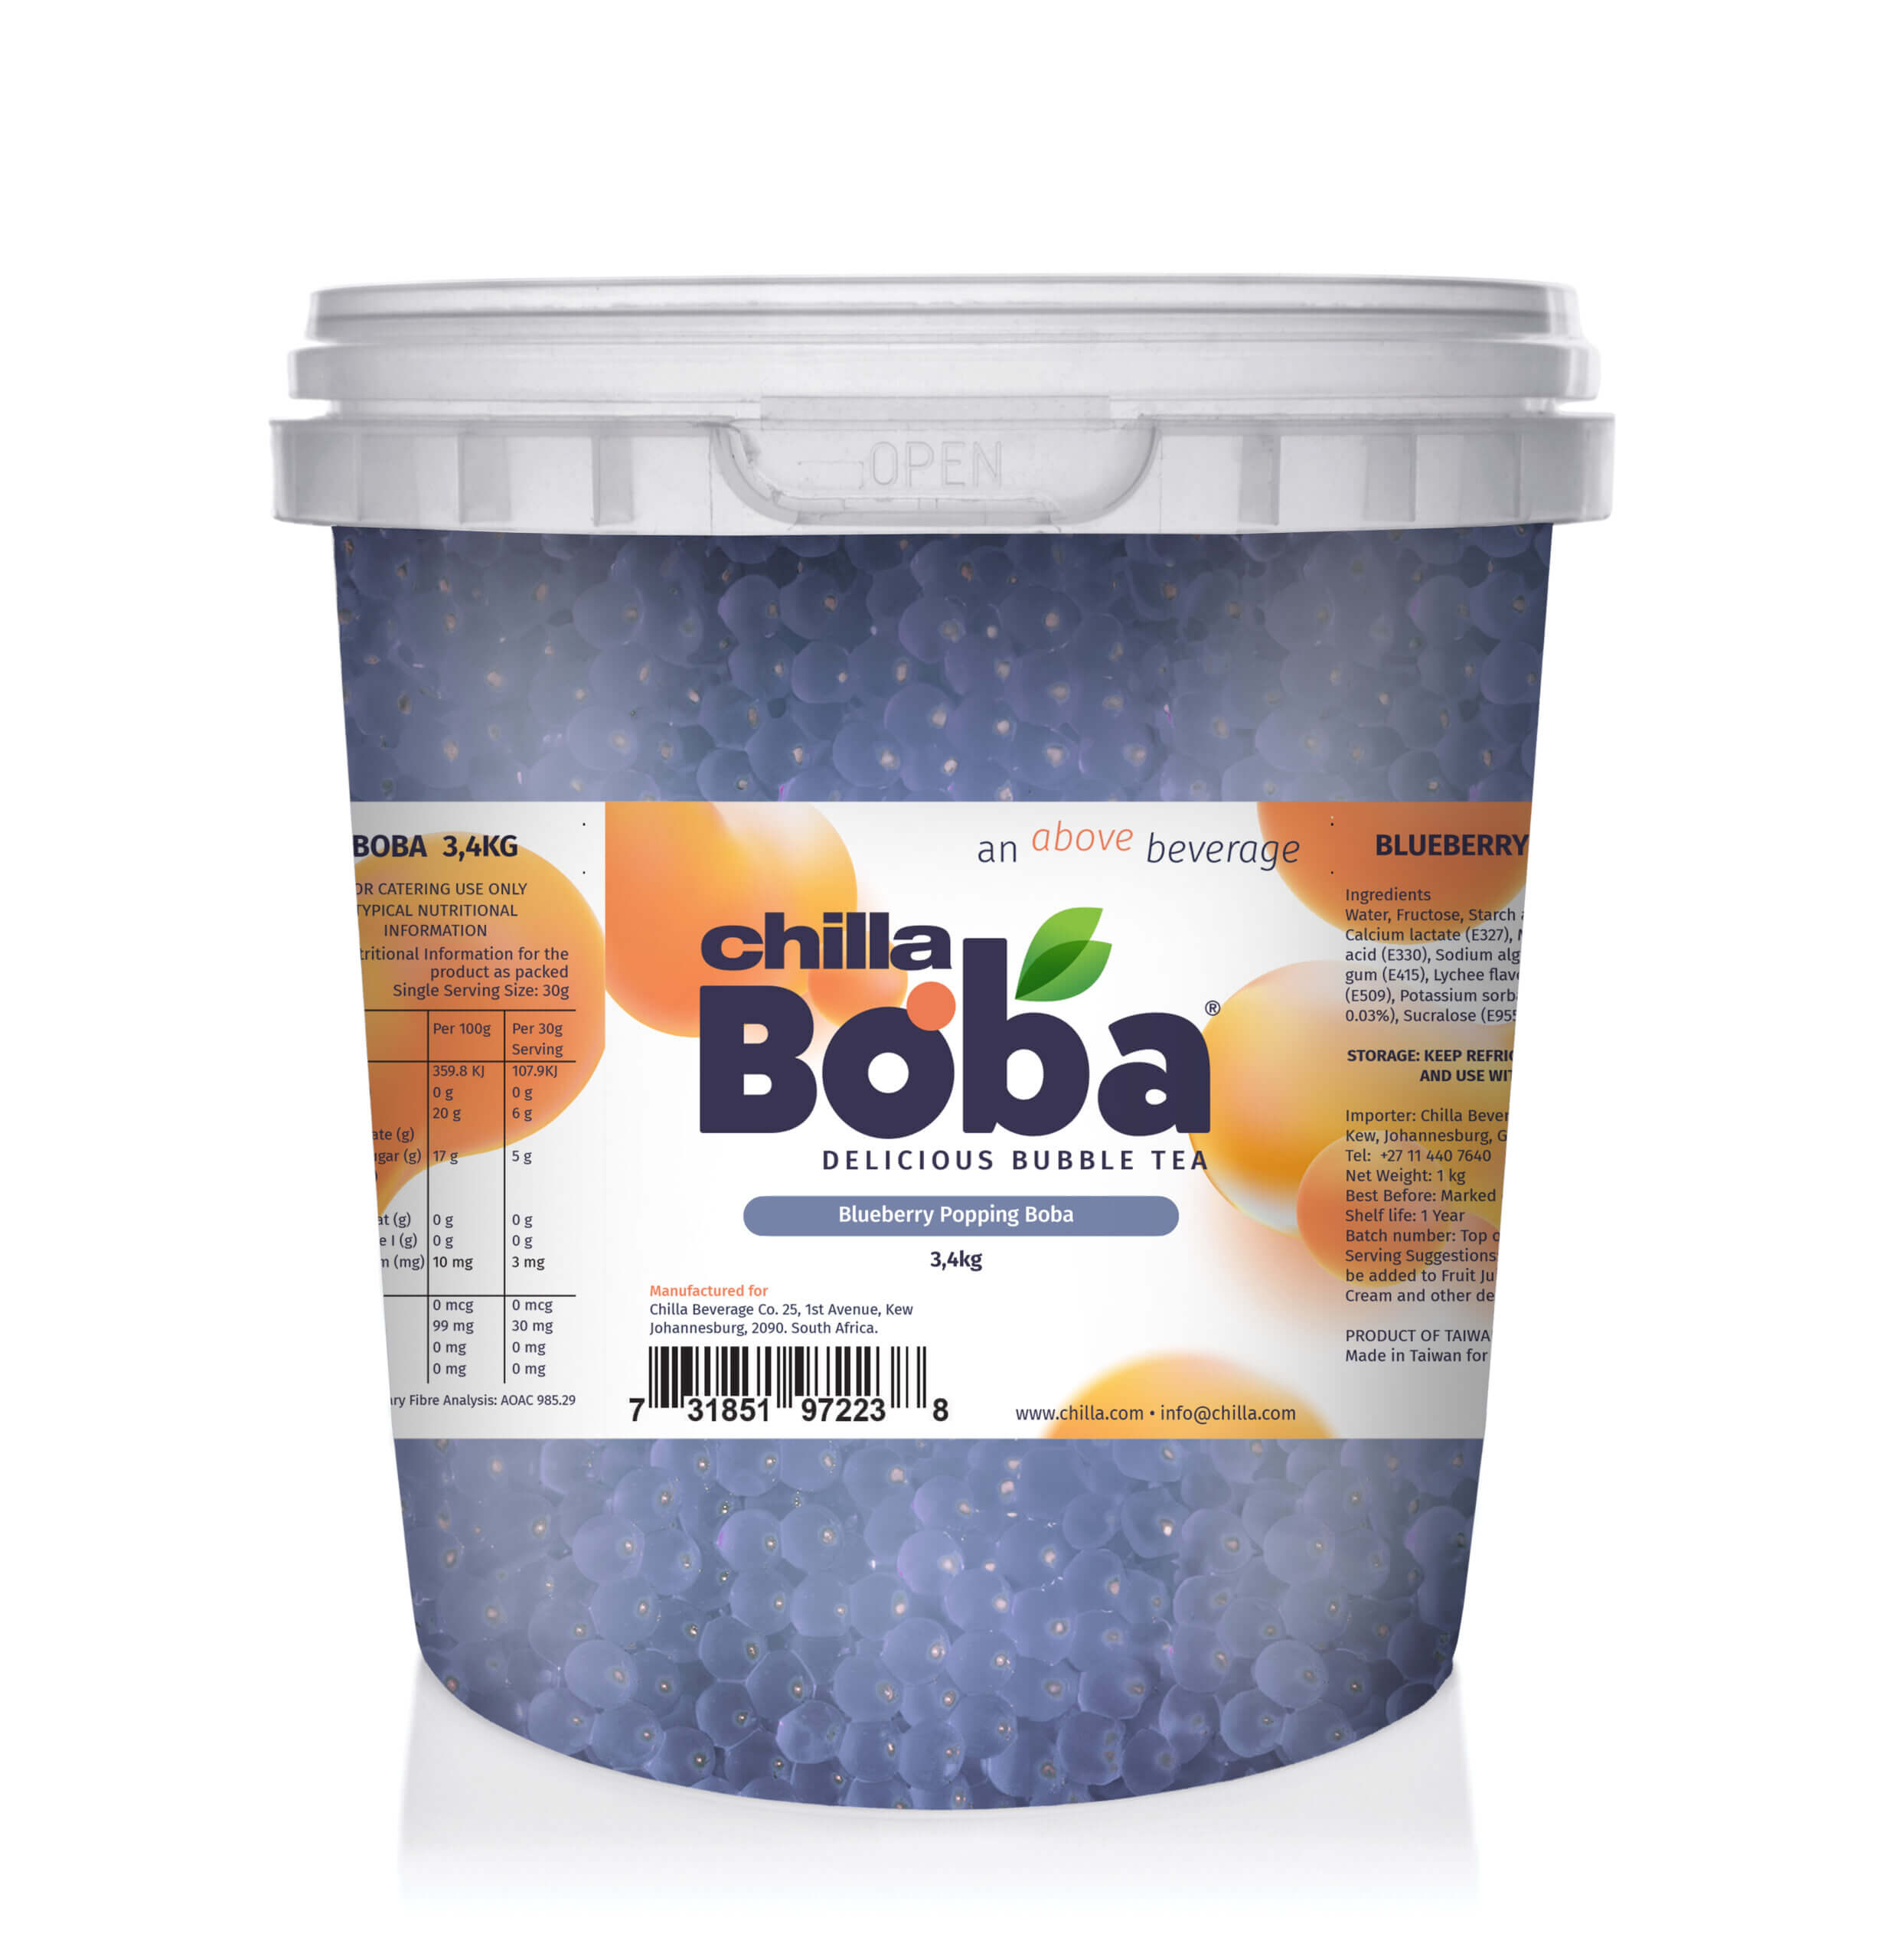 Blueberry Popping Boba 3.4kg